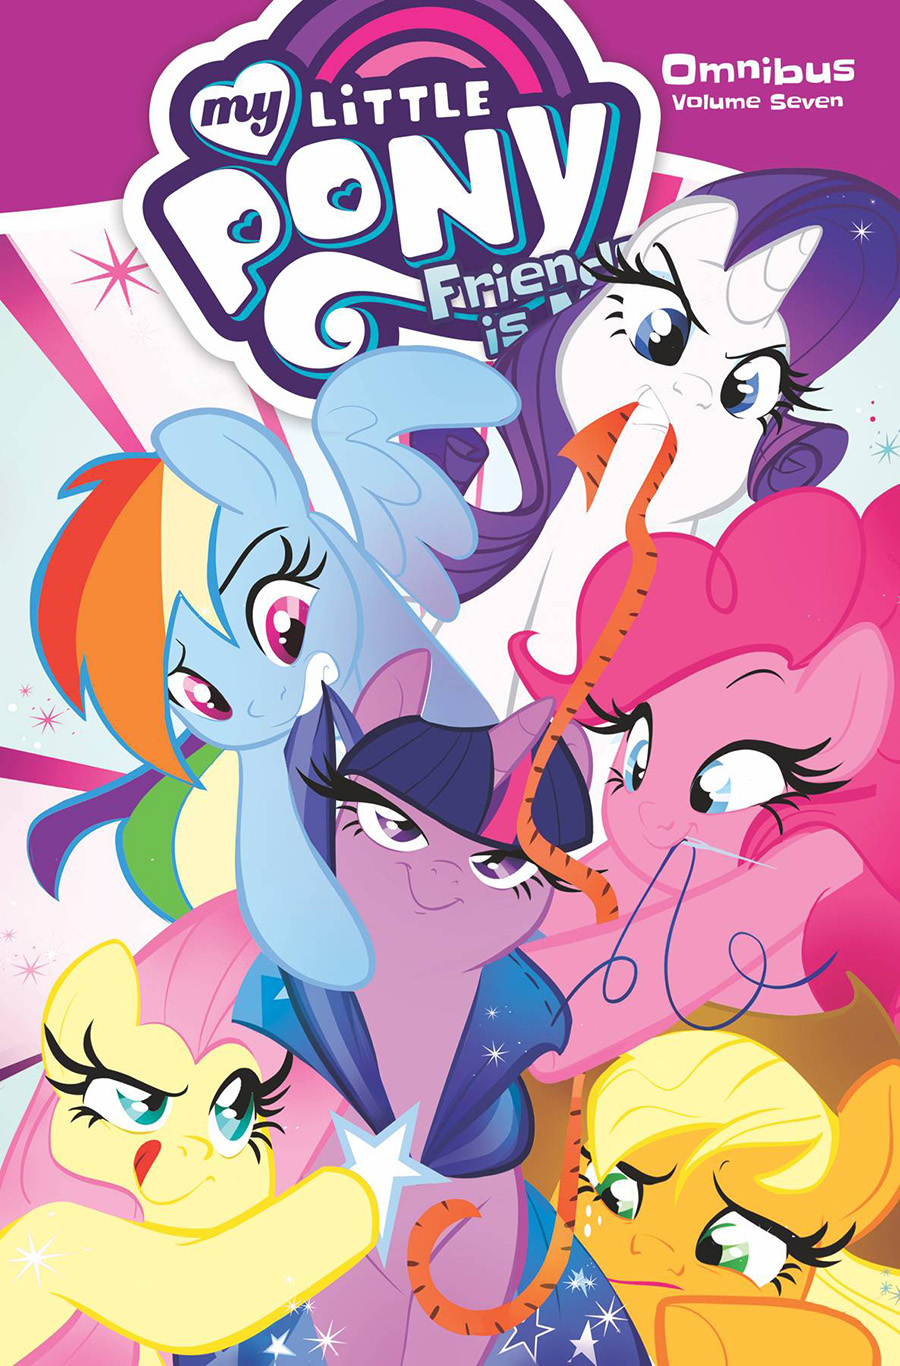 My Little Pony Friendship Is Magic Omnibus Vol 7 TP